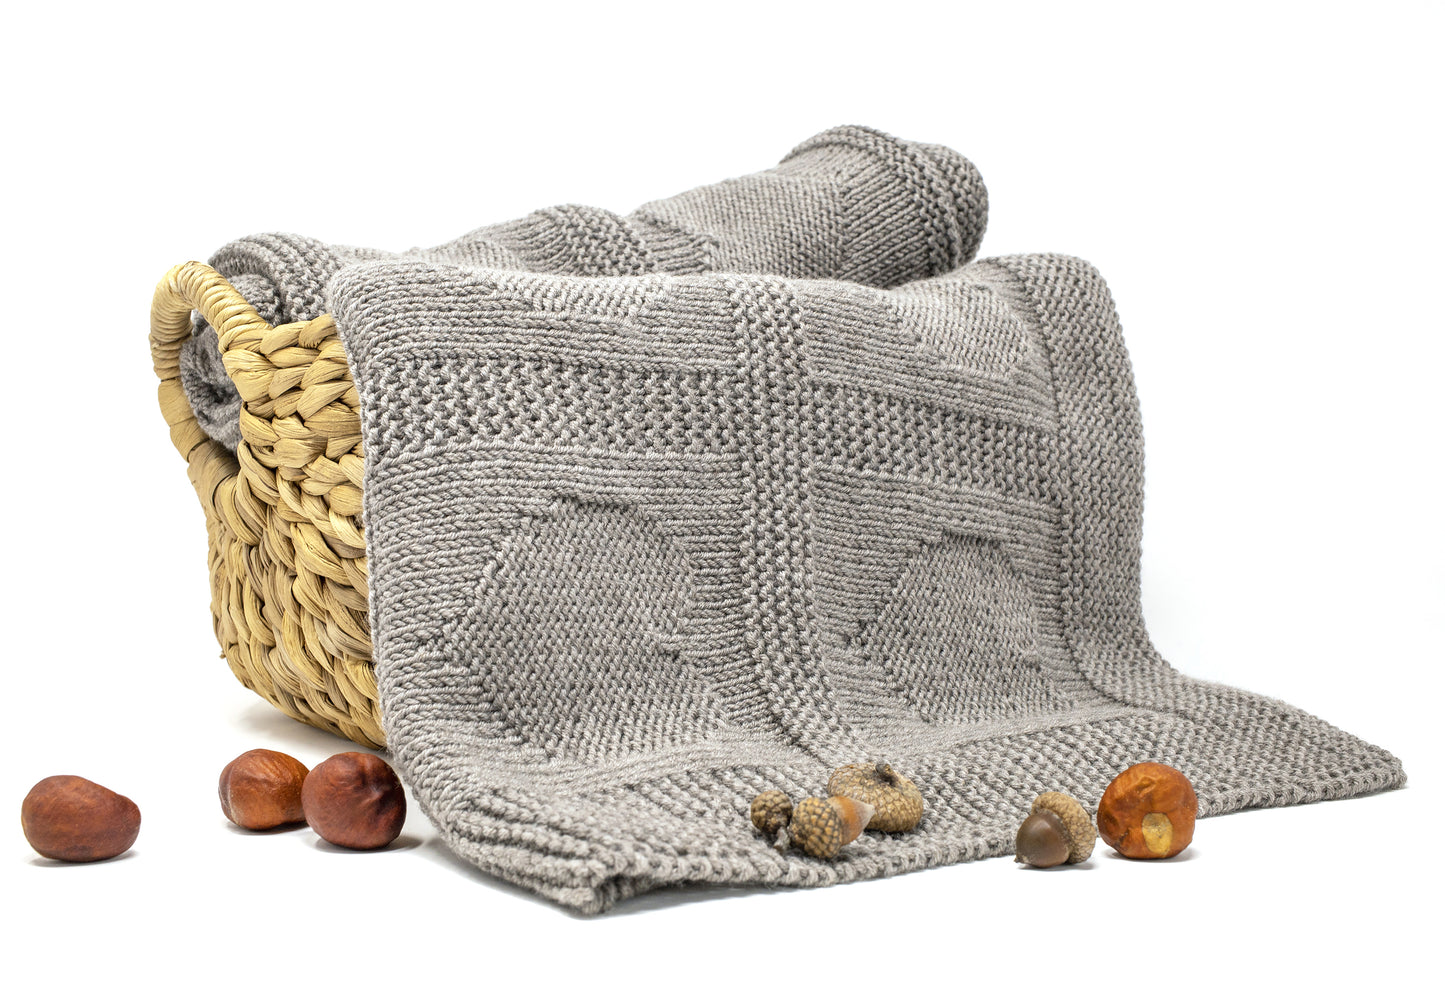 beige brown merino wool hand-knitted baby blanket in Hearts knitting pattern in a basket